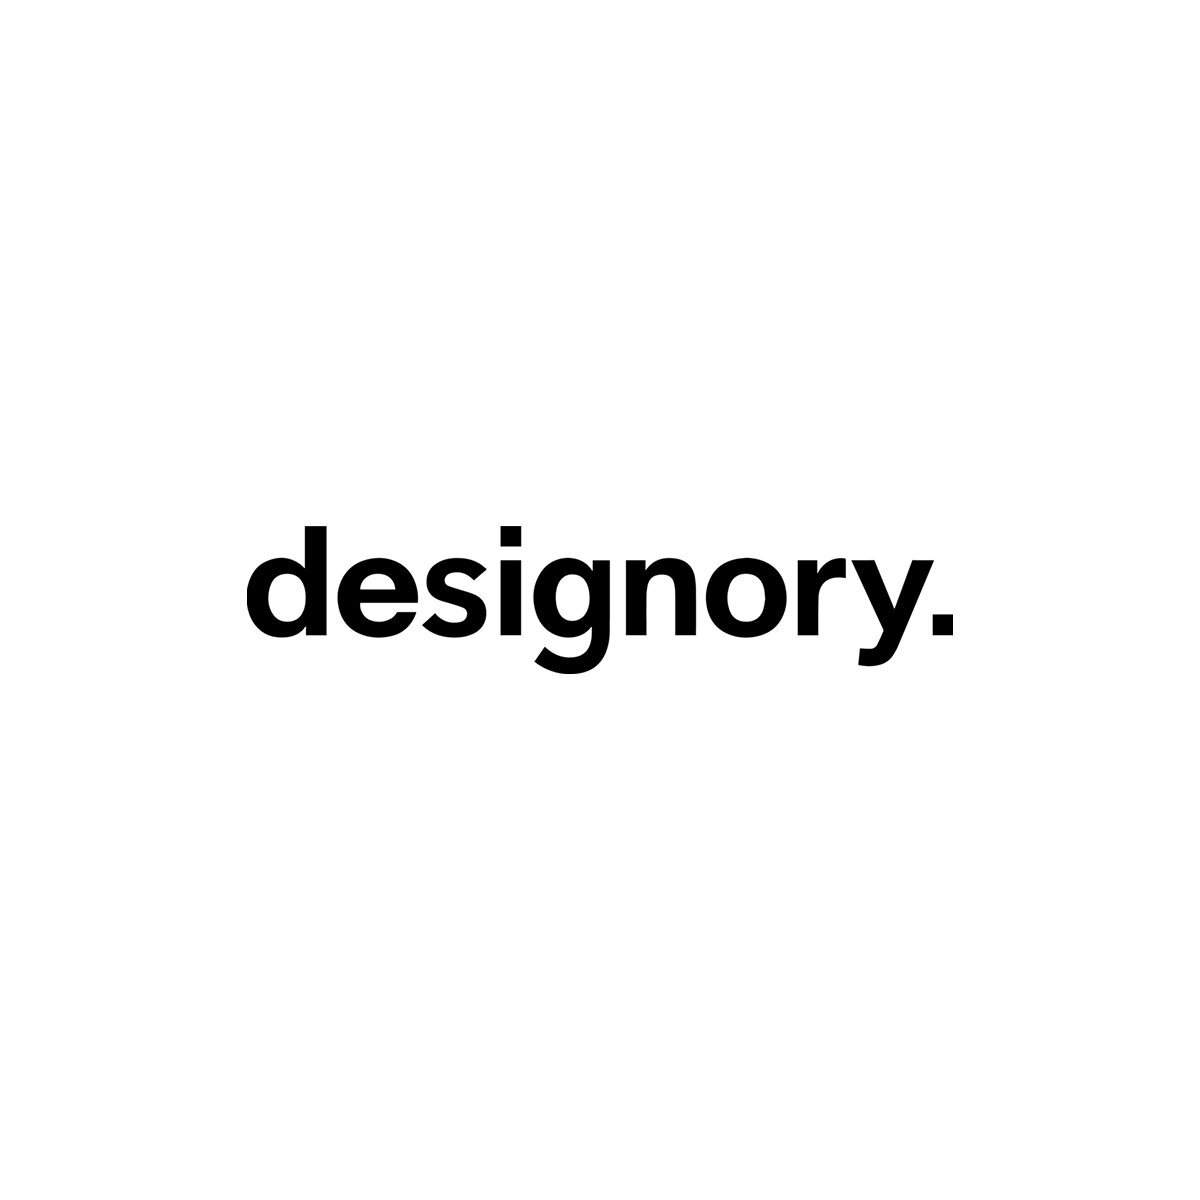 Designory.jpg